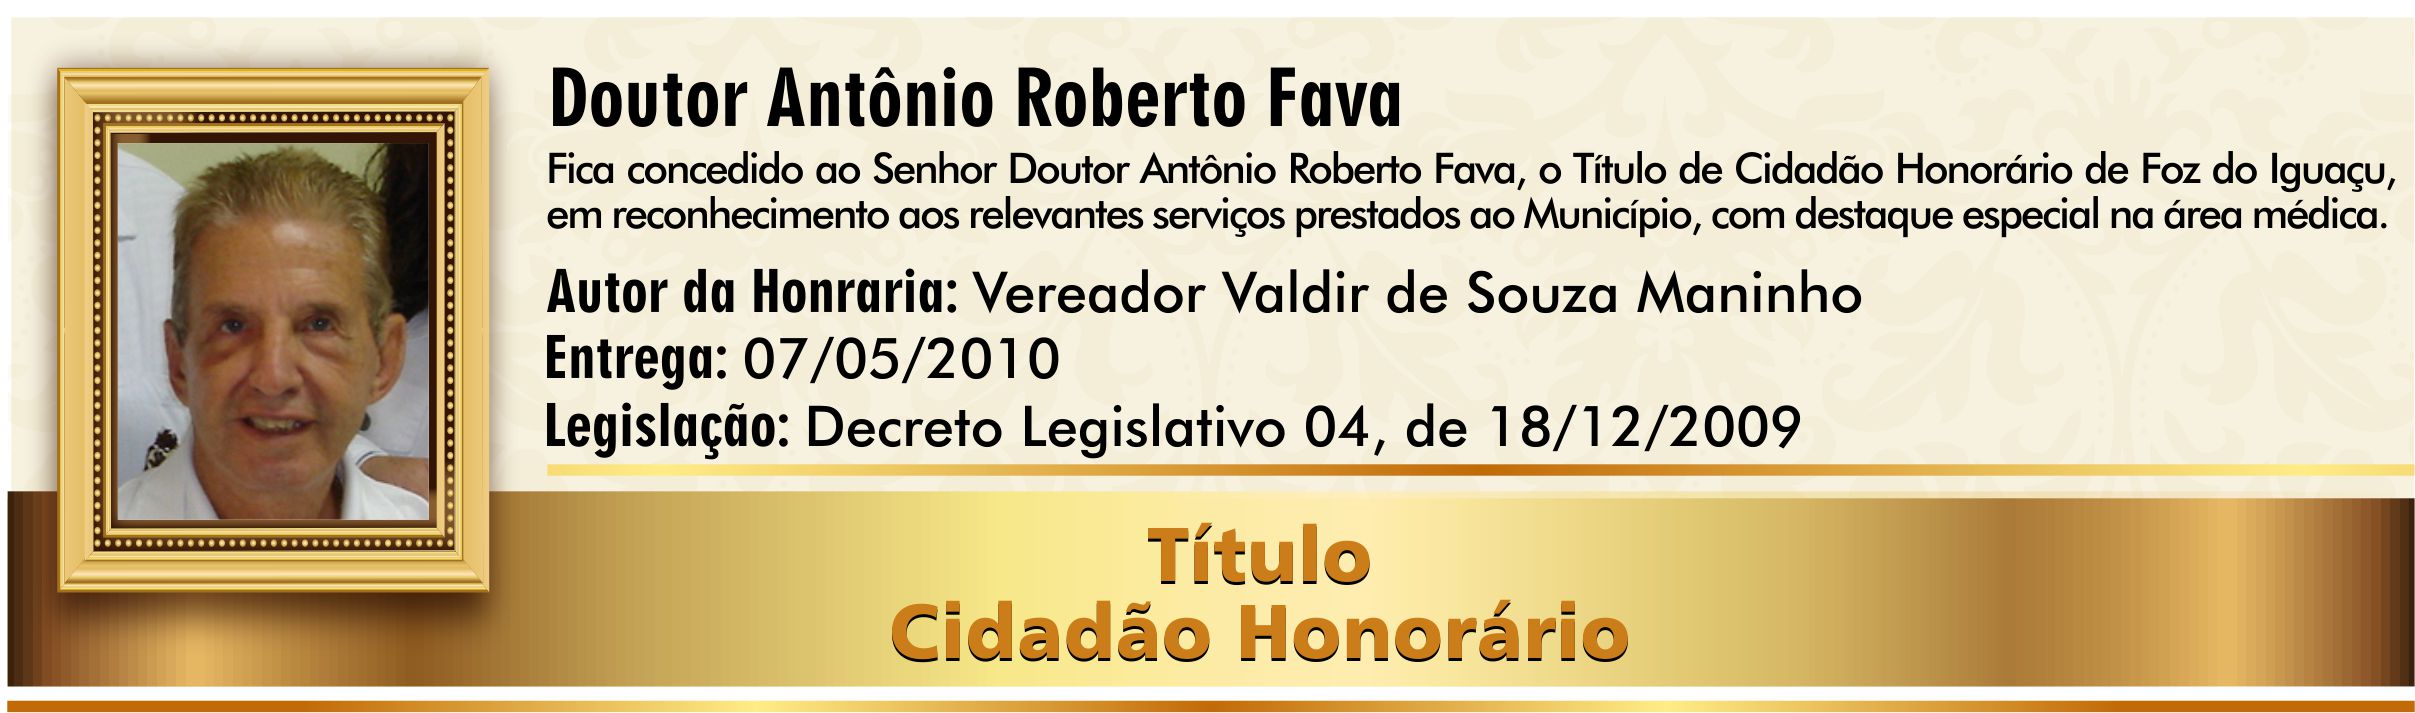 Doutor Antônio Roberto Fava